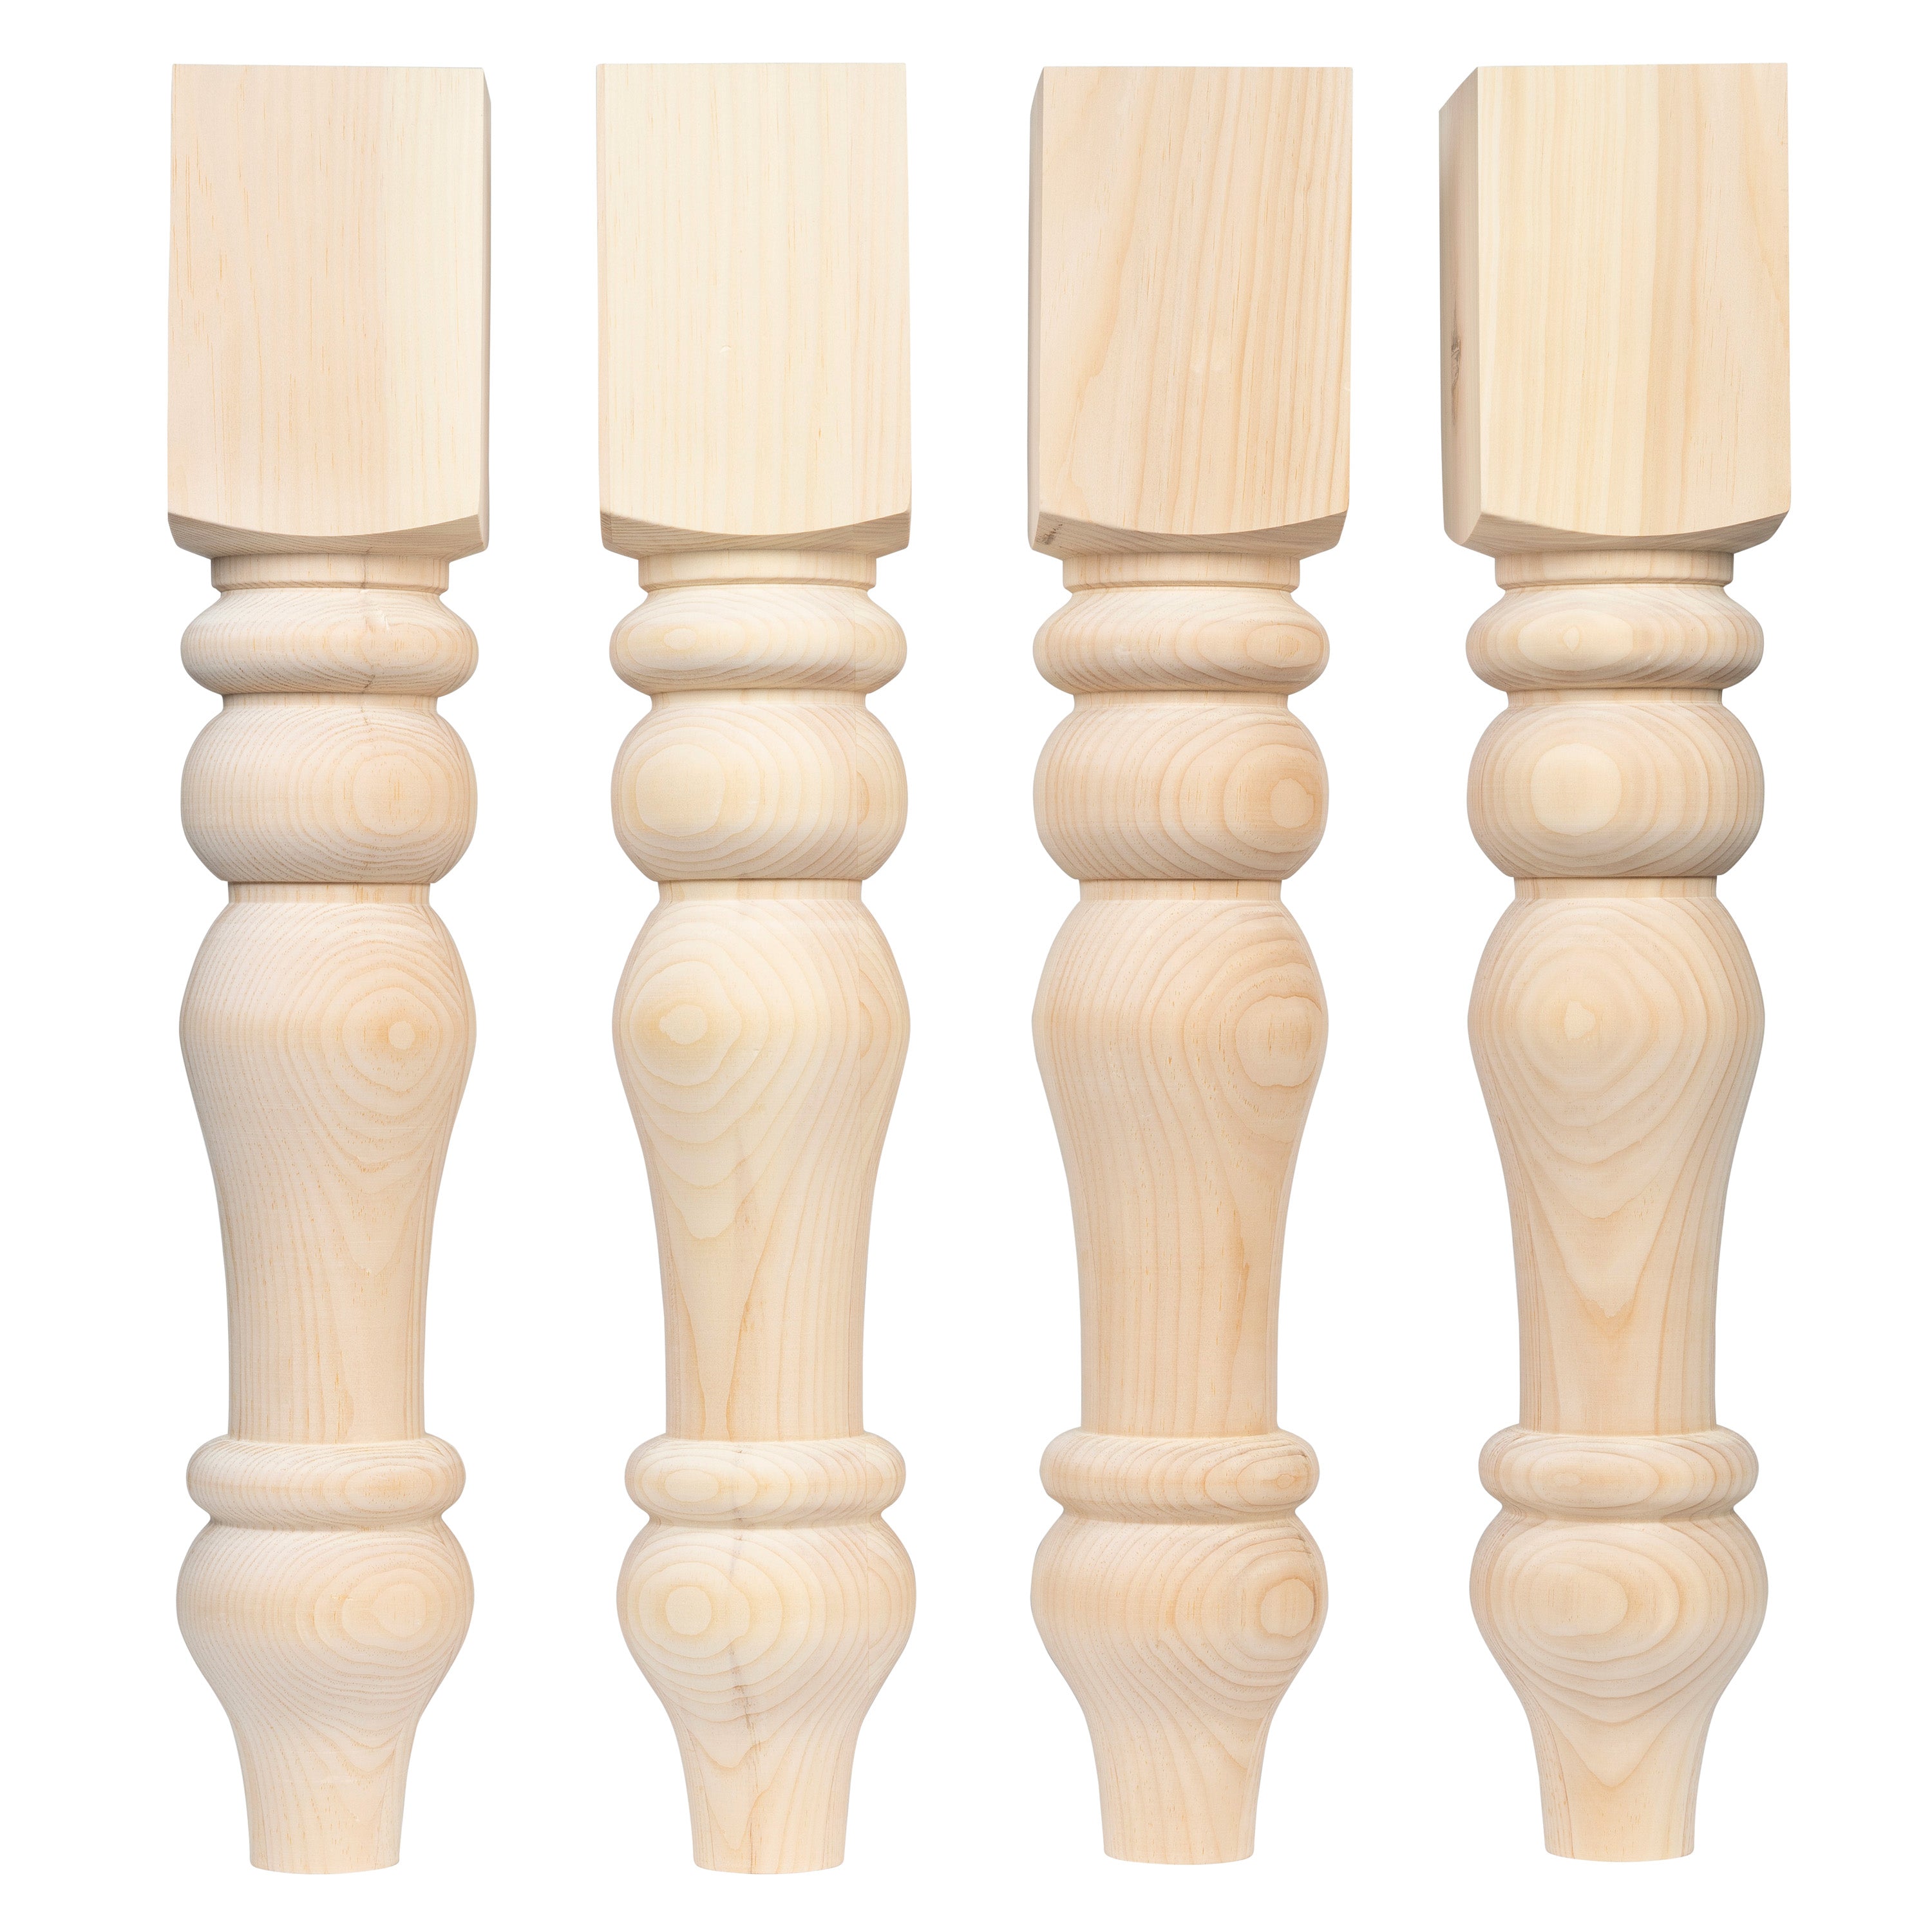 Pine Farmhouse Wooden Dining Table Legs by Carolina Leg Co